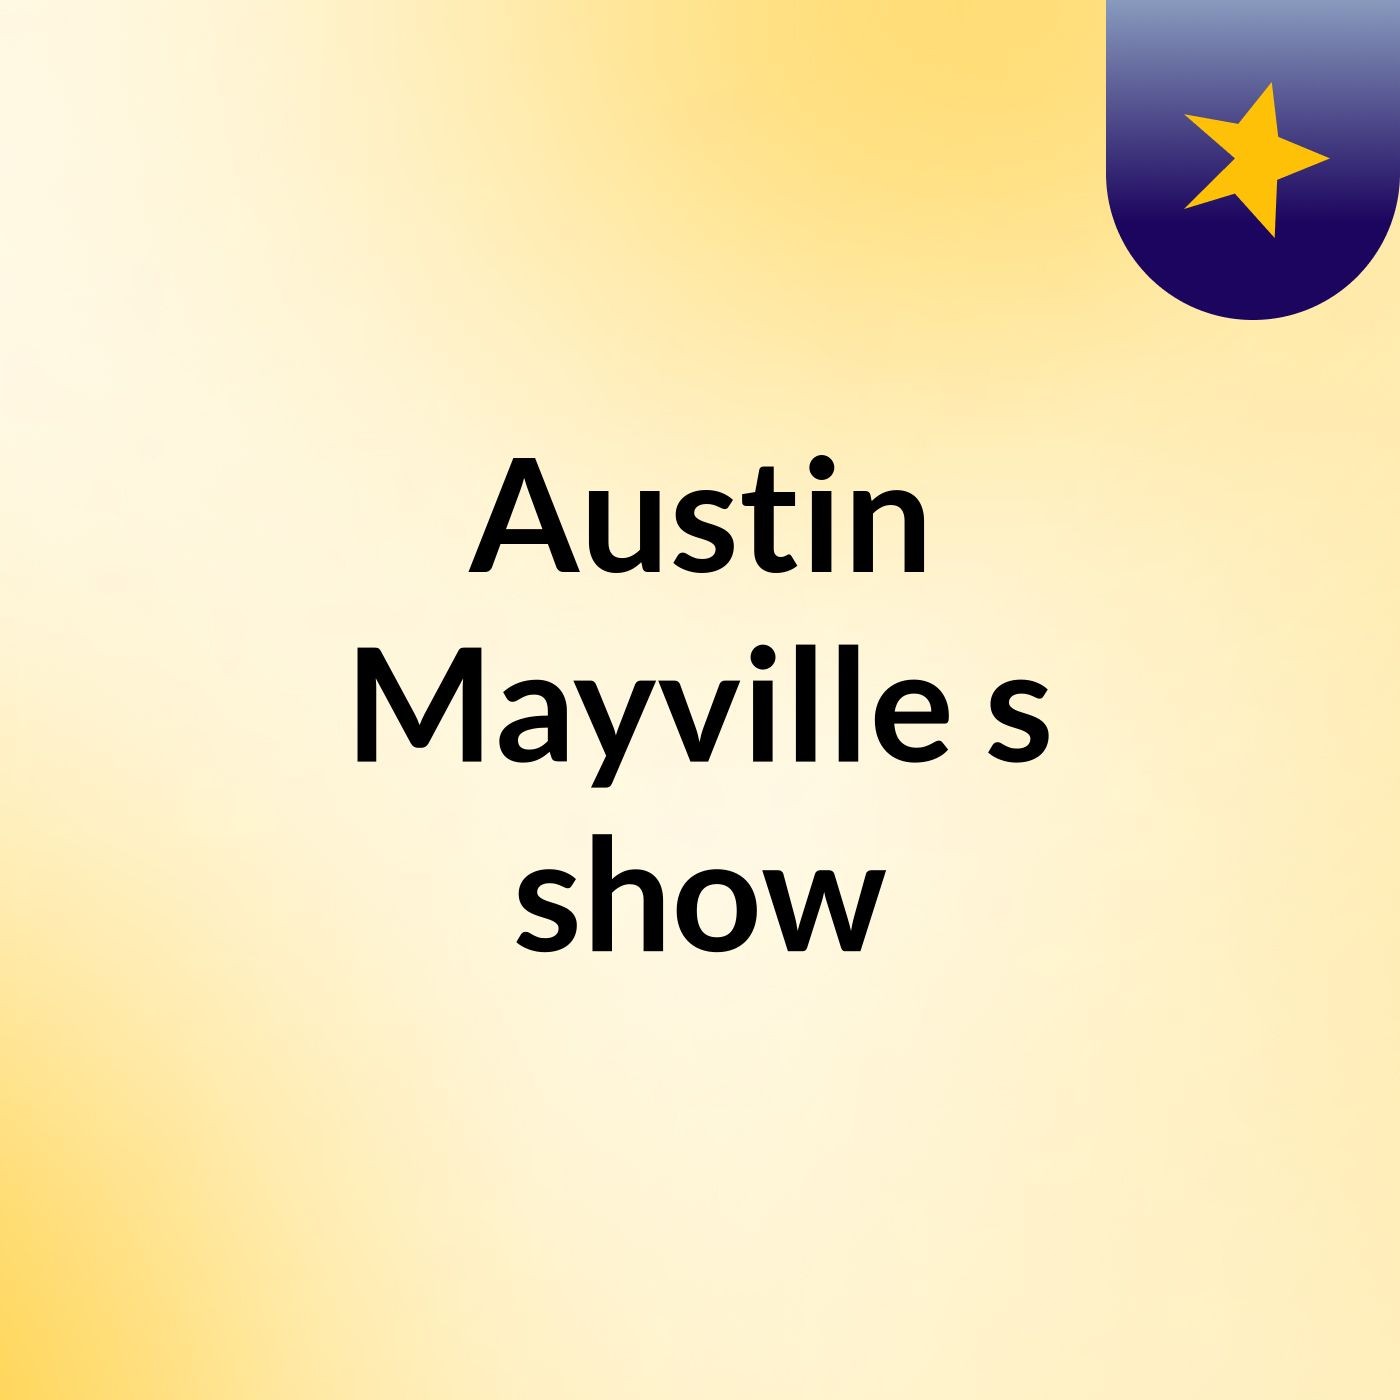 Austin Mayville's show